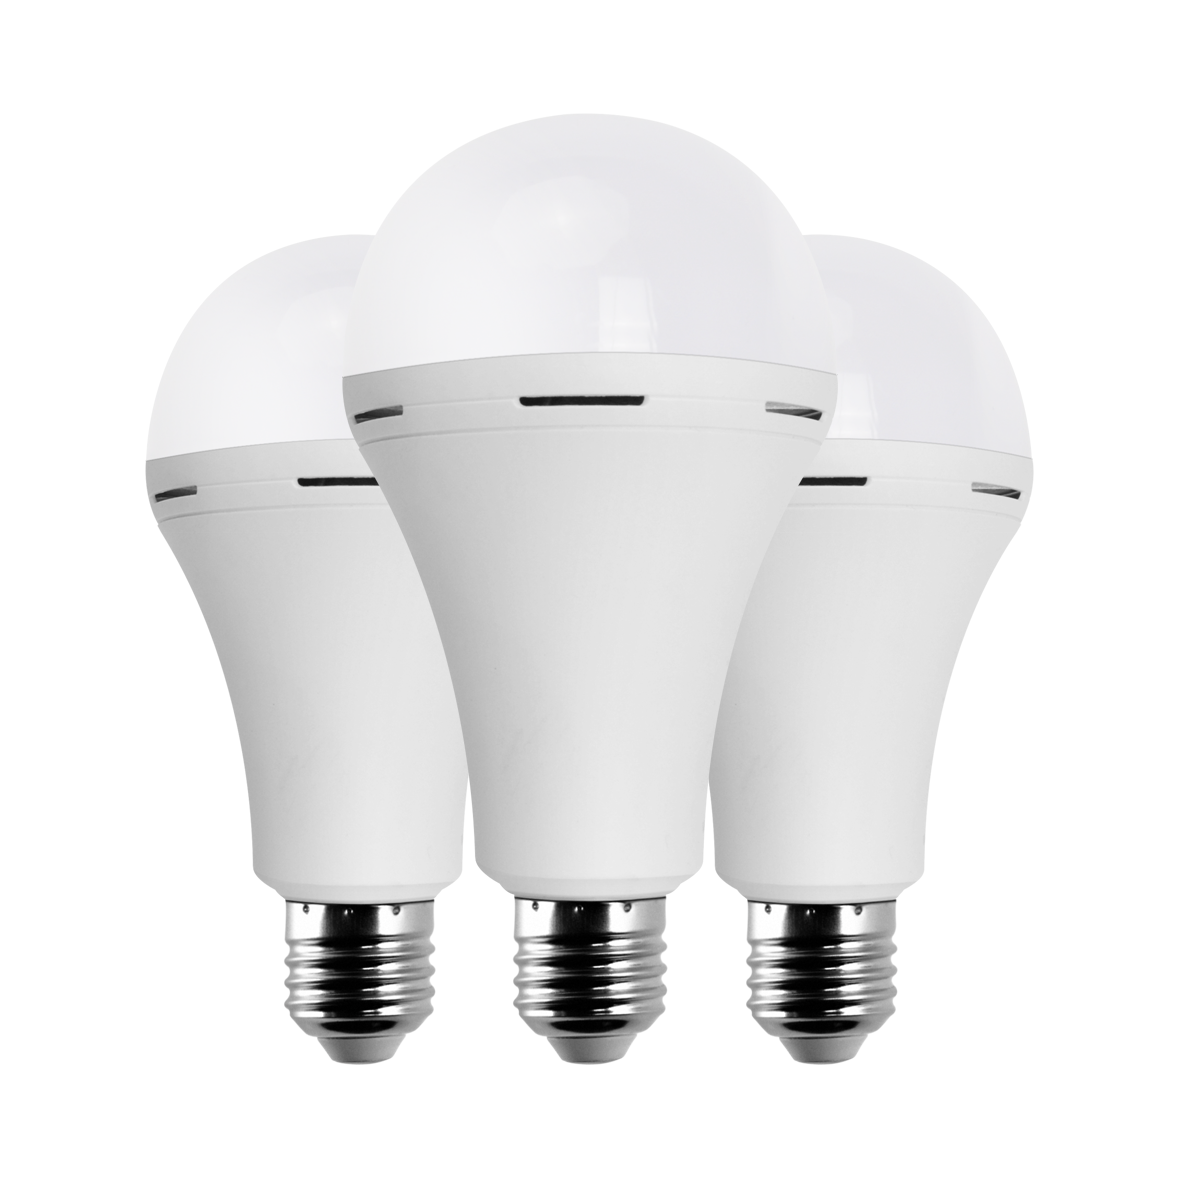 LED BULB Emergency 9 Watt Emergency Bulb Rechargeable Light E26 B22 E27 Battery Operated LED Light Bulb For Home